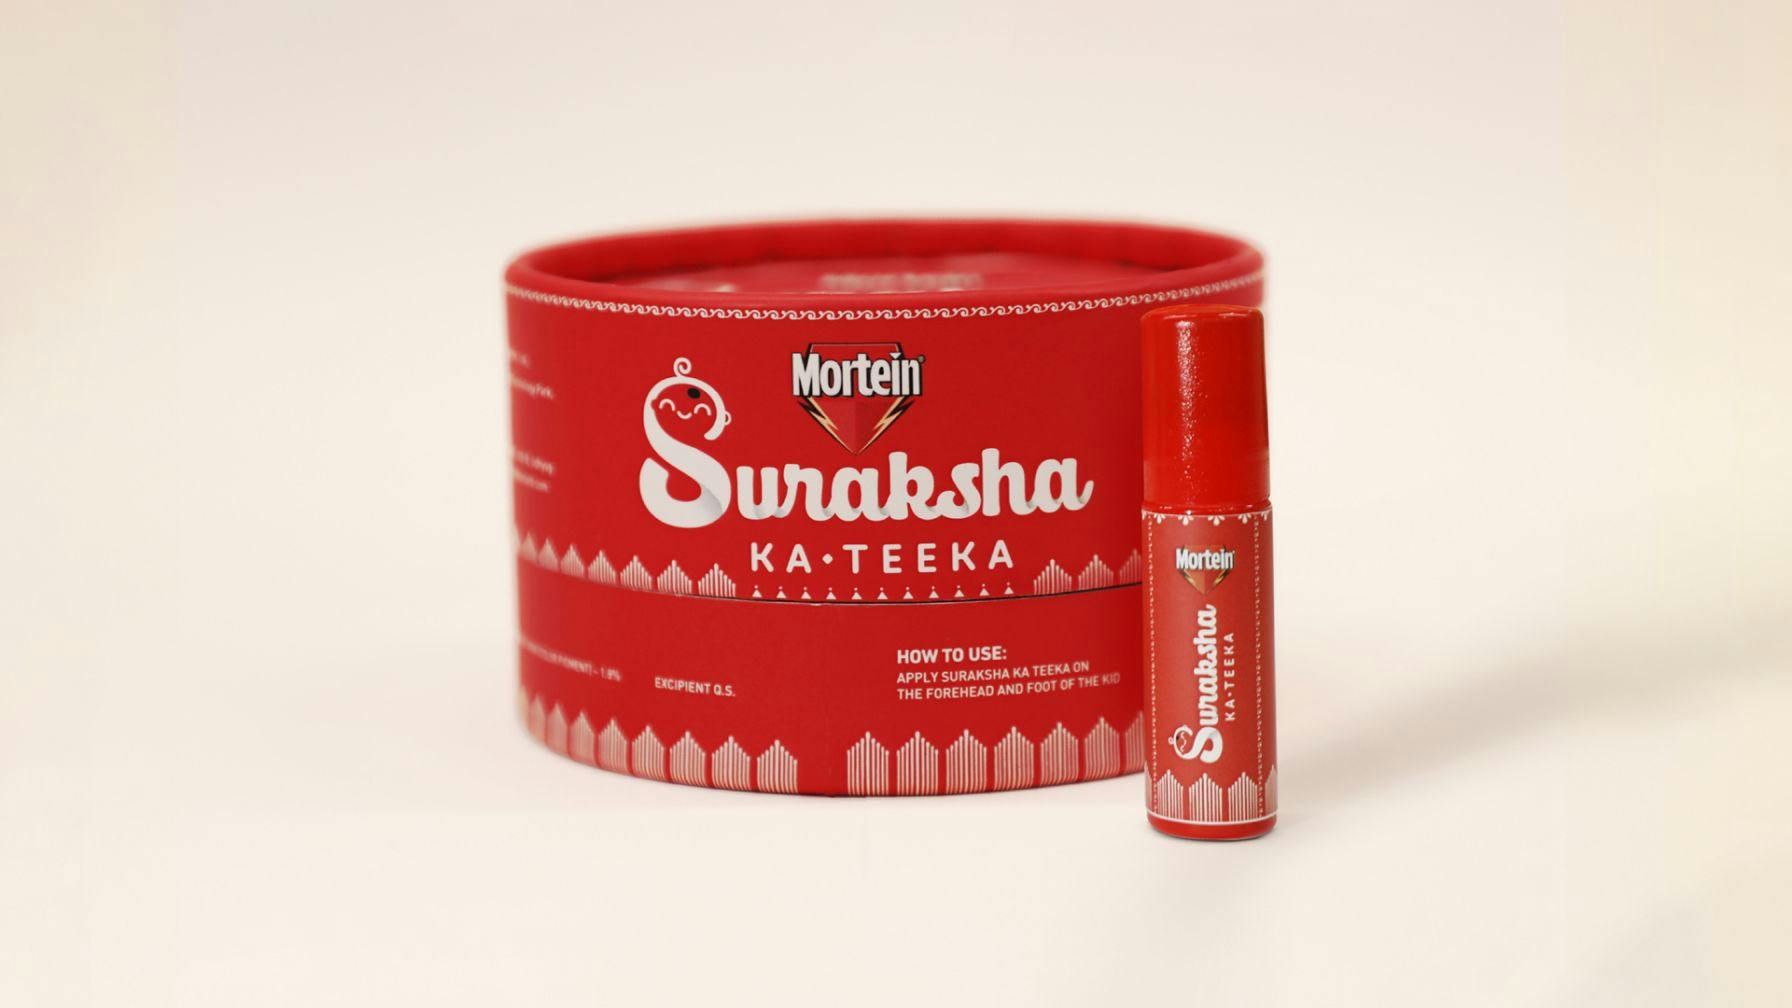 Mortein, Suraksha Ka Teeka. Red product packaging